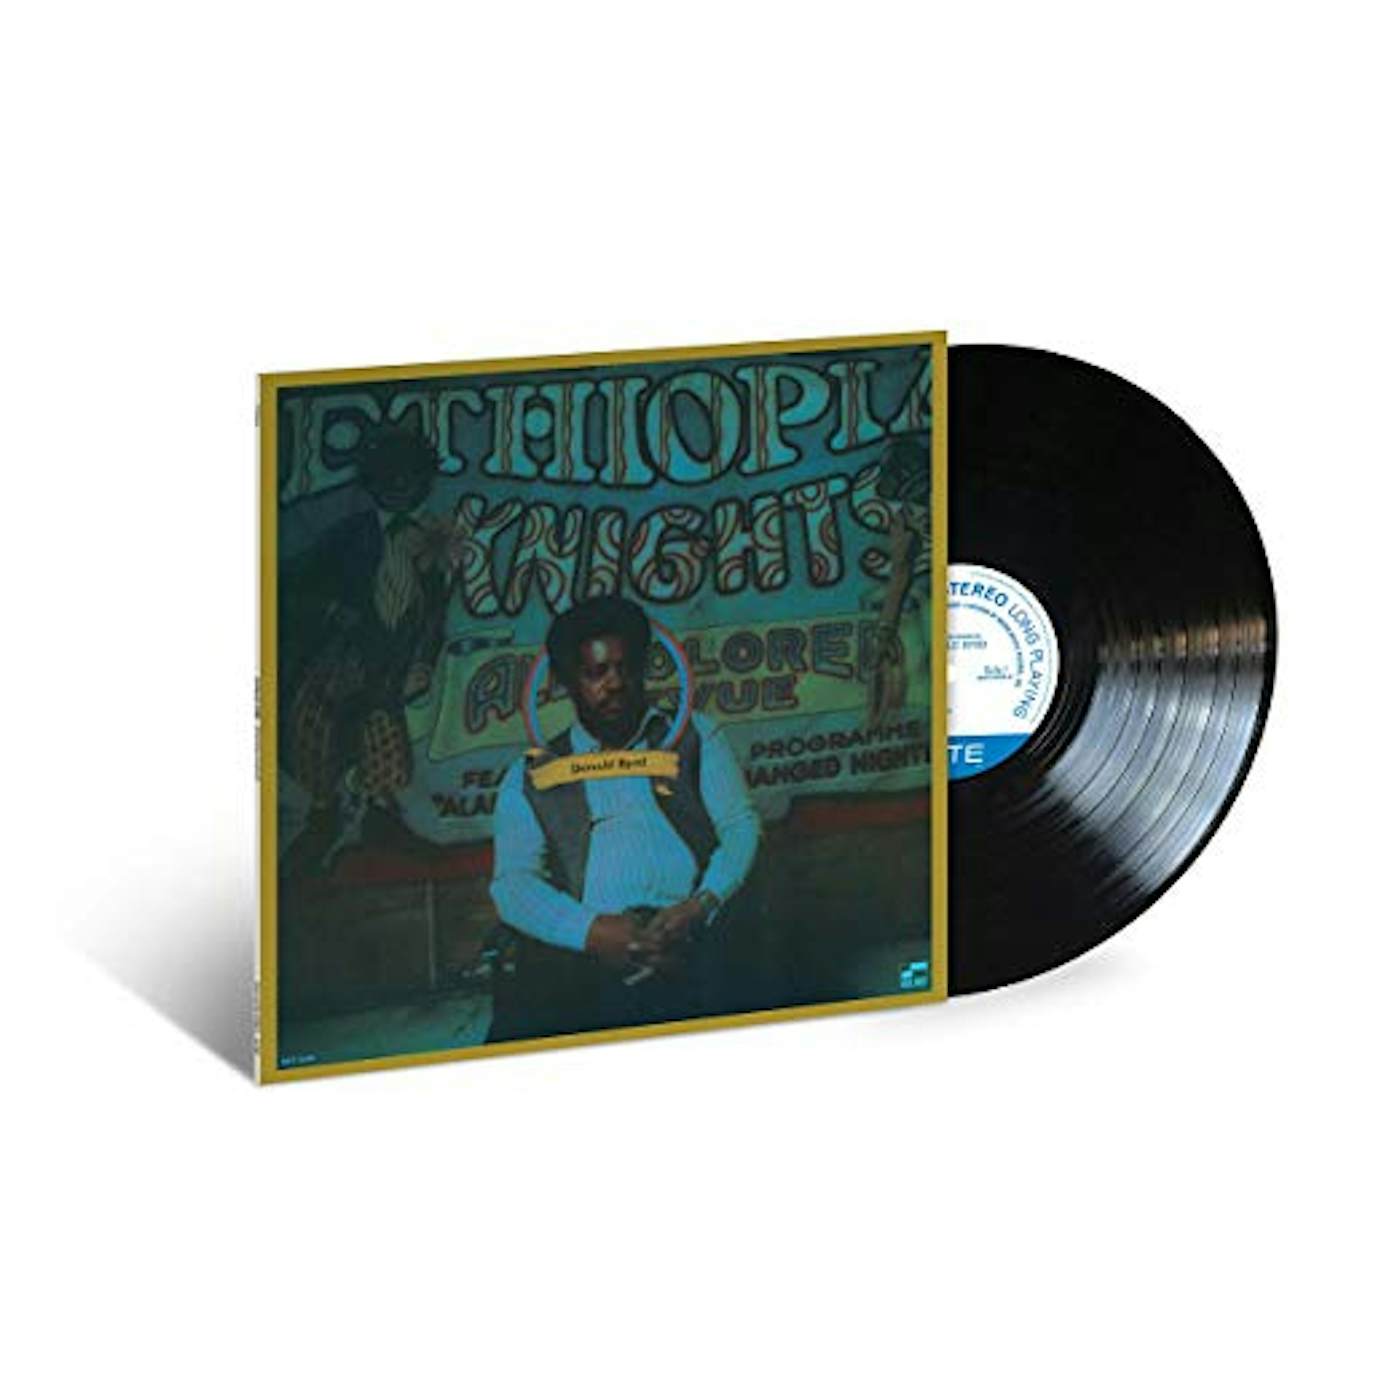 Donald Byrd Ethiopian Knights Vinyl Record